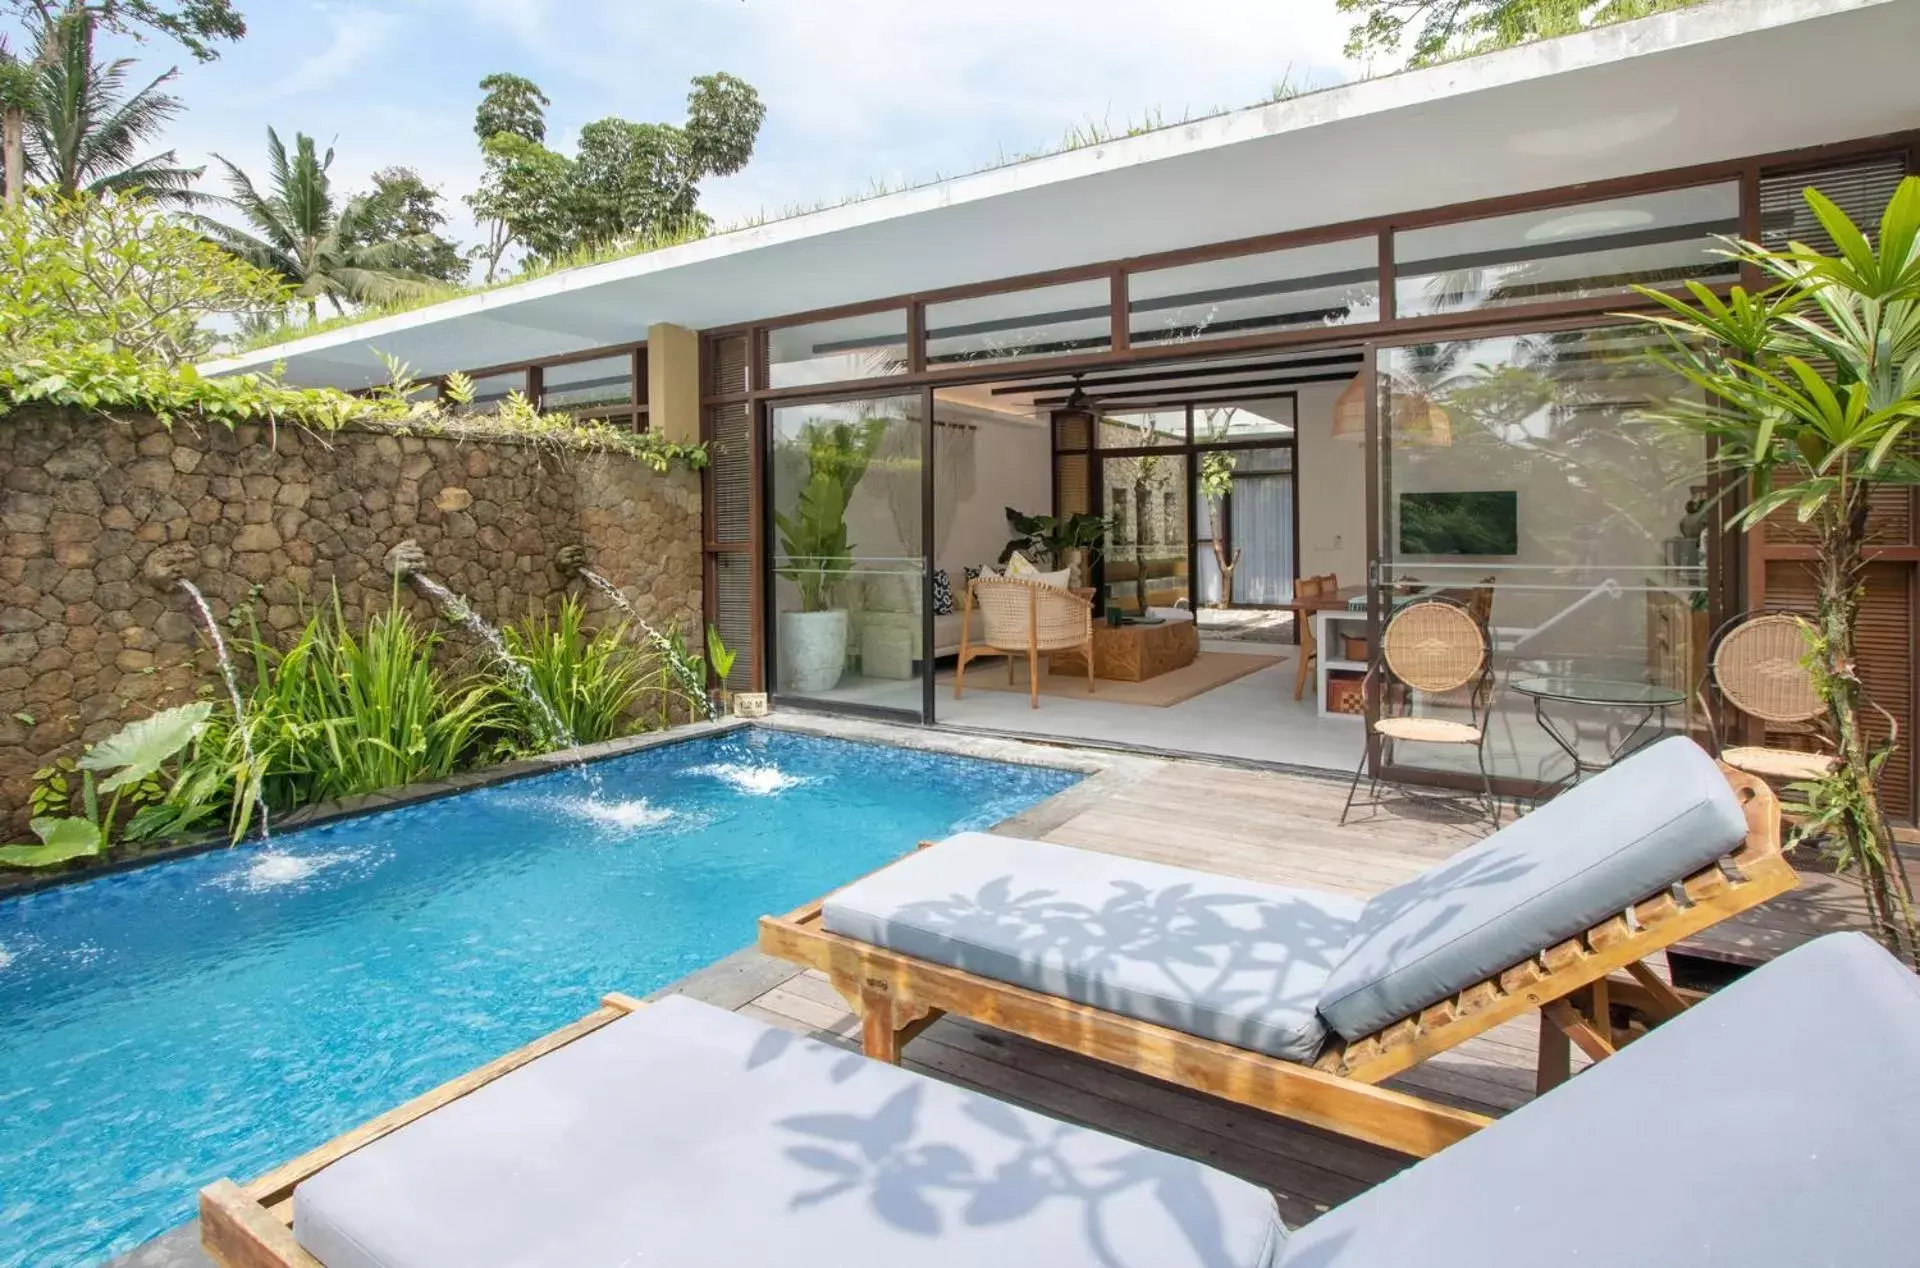 Swimming Pool in Ubud Green Resort Villas Powered by Archipelago